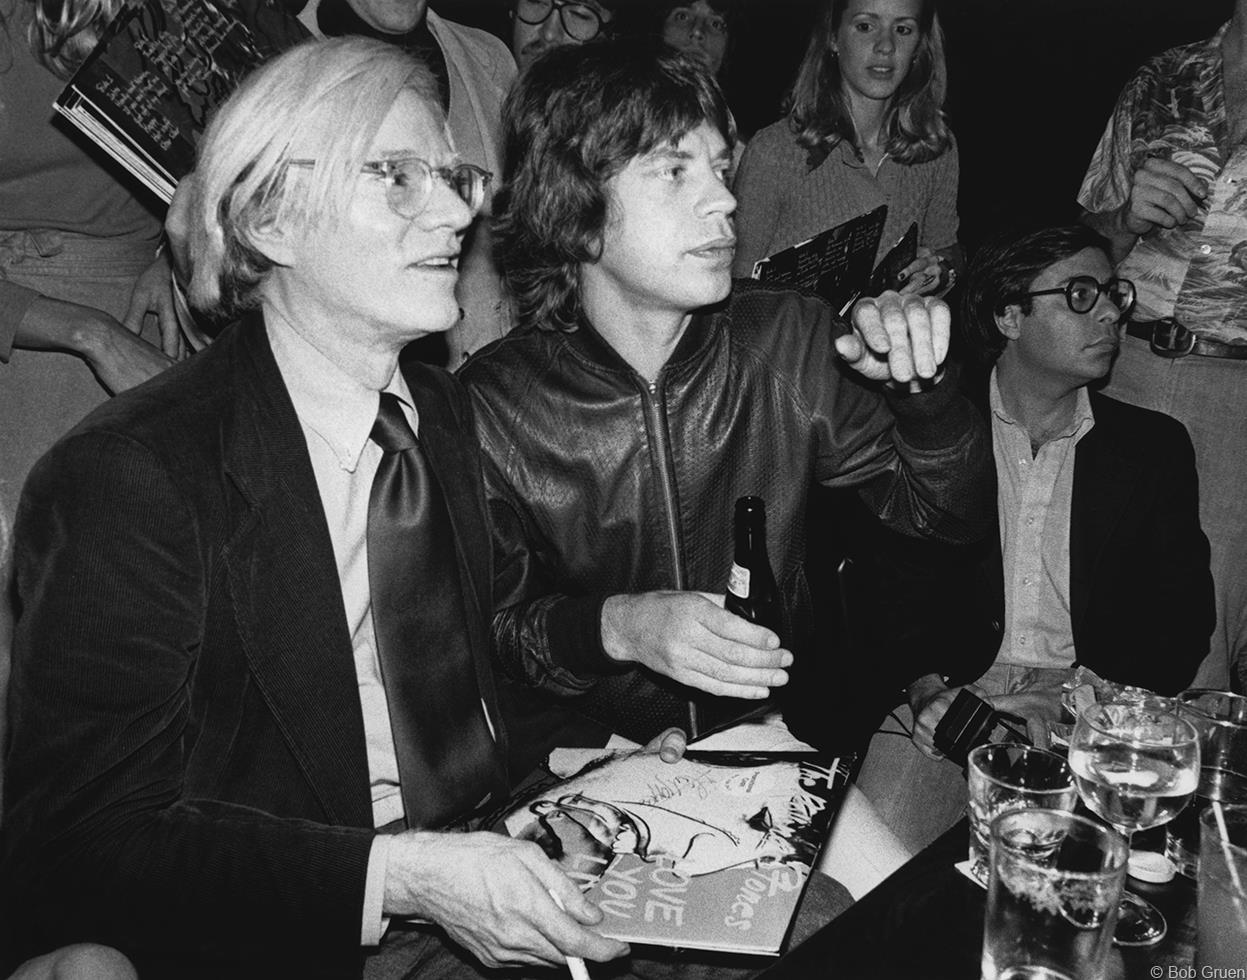 Portrait Photograph Bob Gruen - Andy Warhol & Mick Jagger, NYC 1977